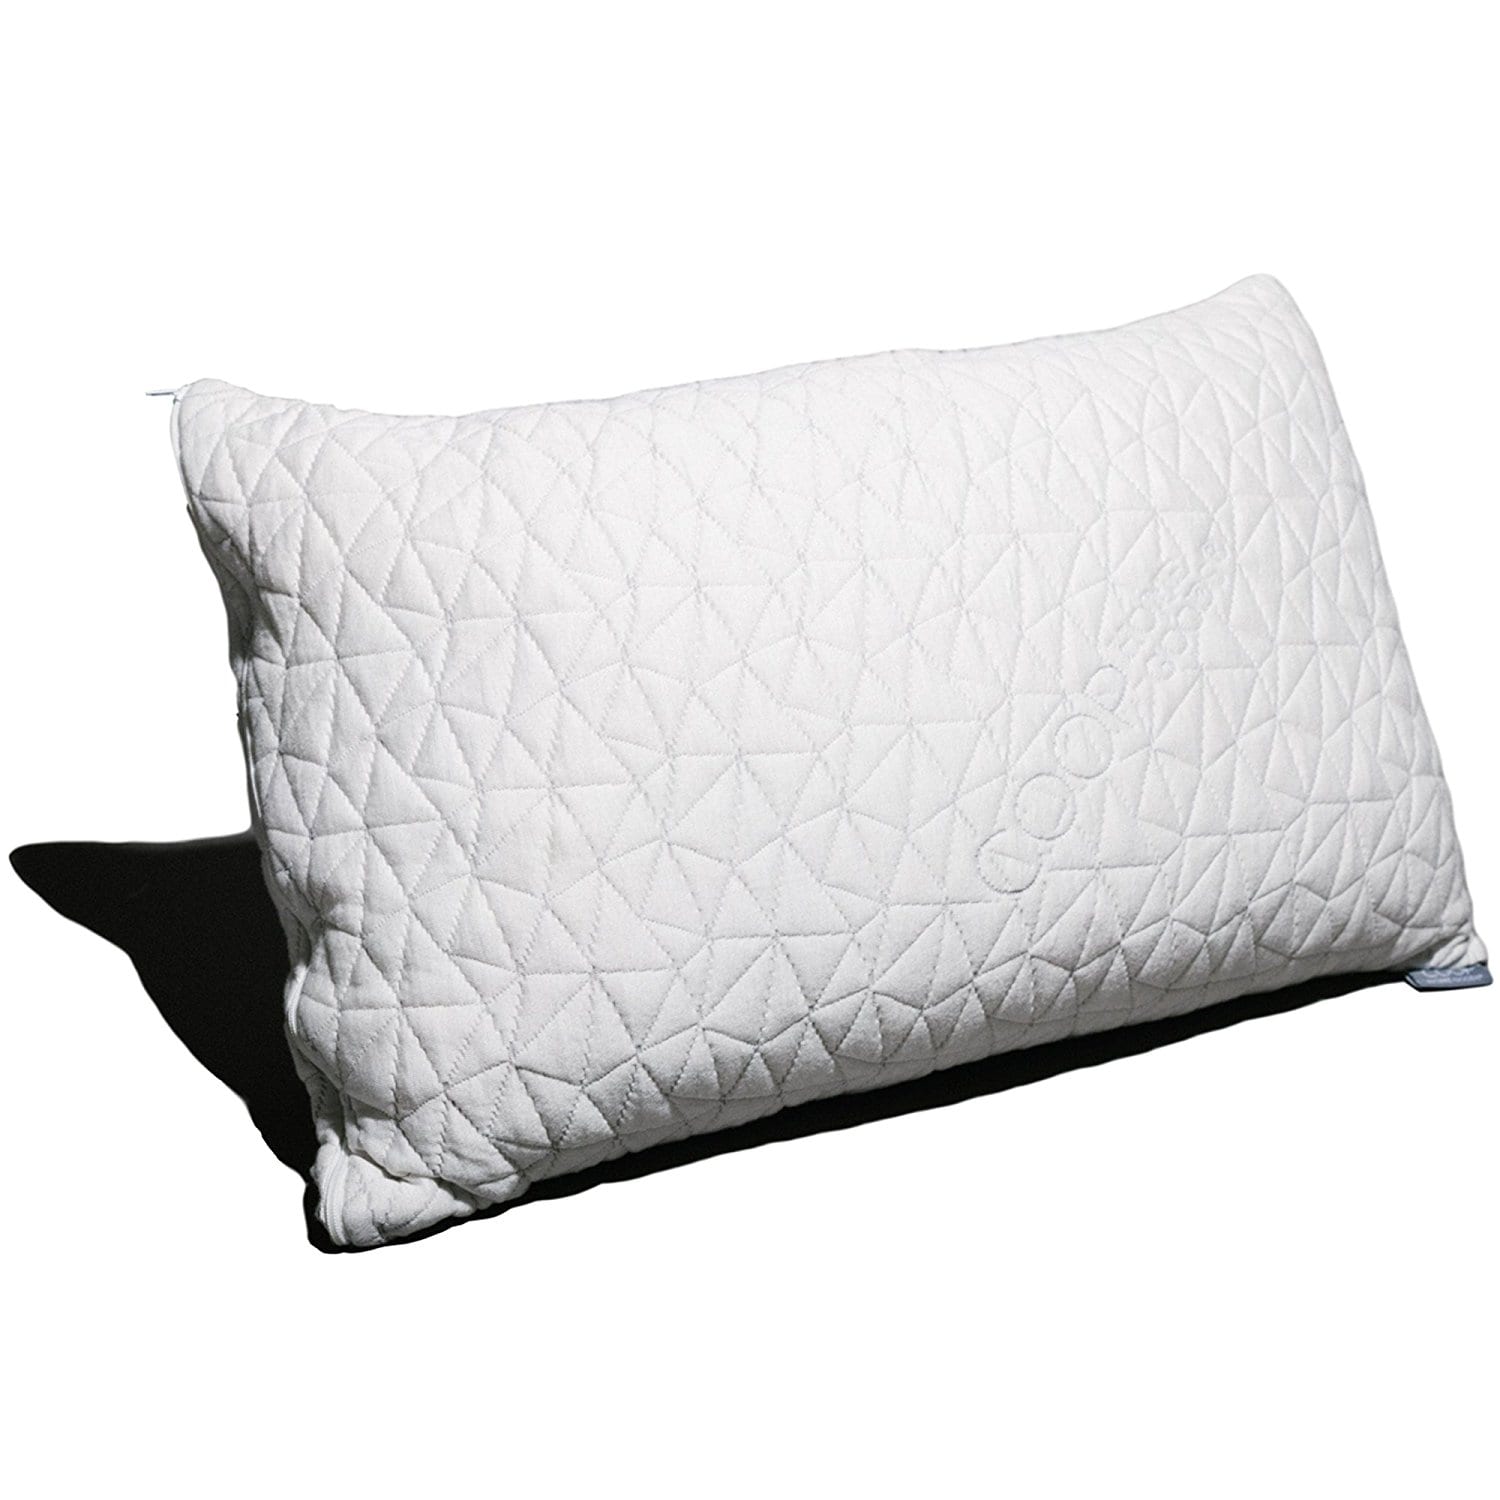 Coop Home Goods Original Pillow Review